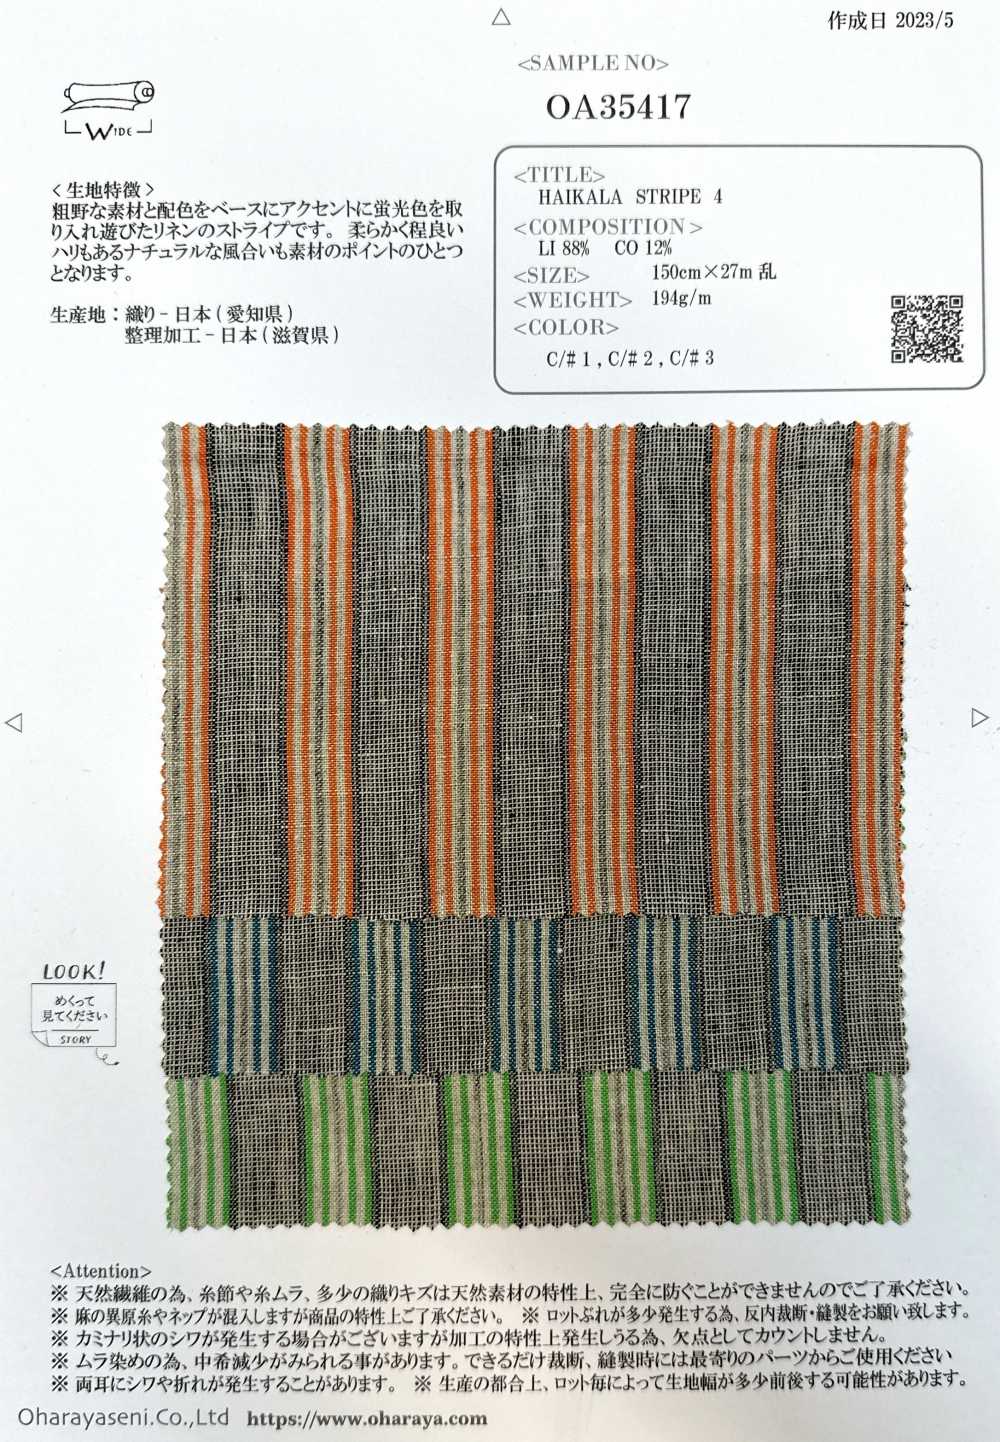 OA35417 HAIKARA-STREIFEN 4[Textilgewebe] Oharayaseni